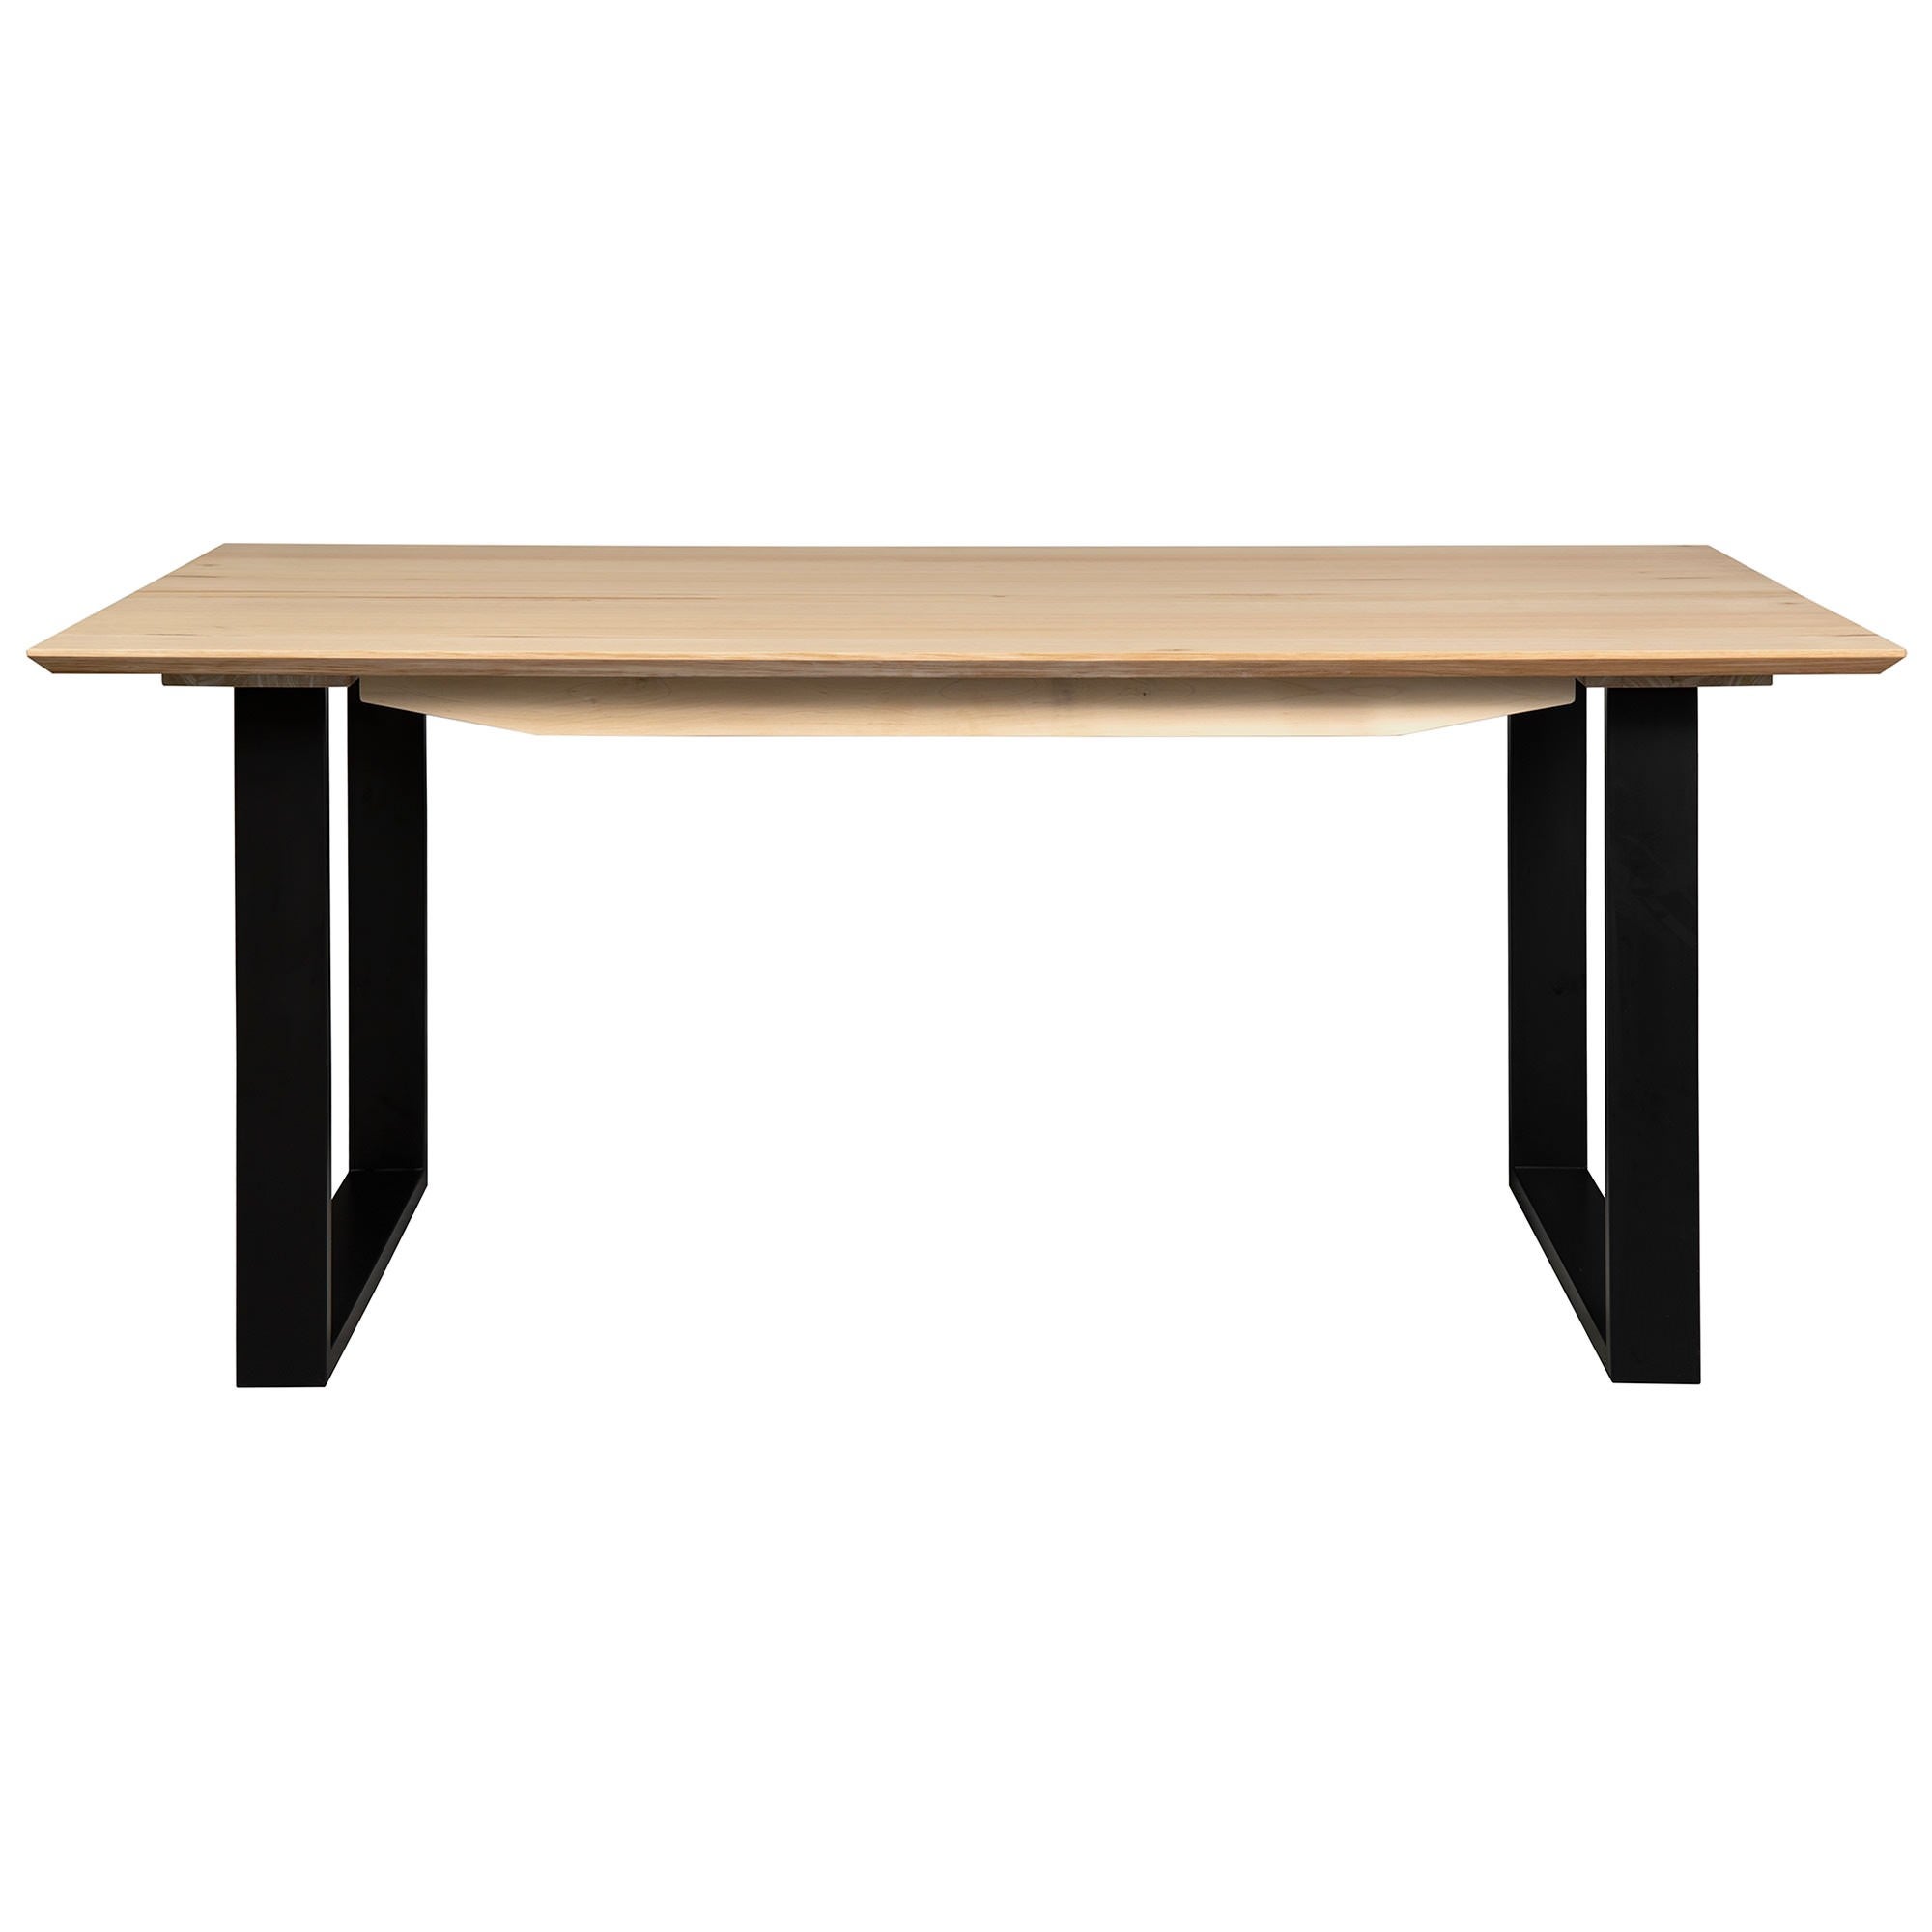 Batavia Messmate Timber & Metal Dining Table, 180cm